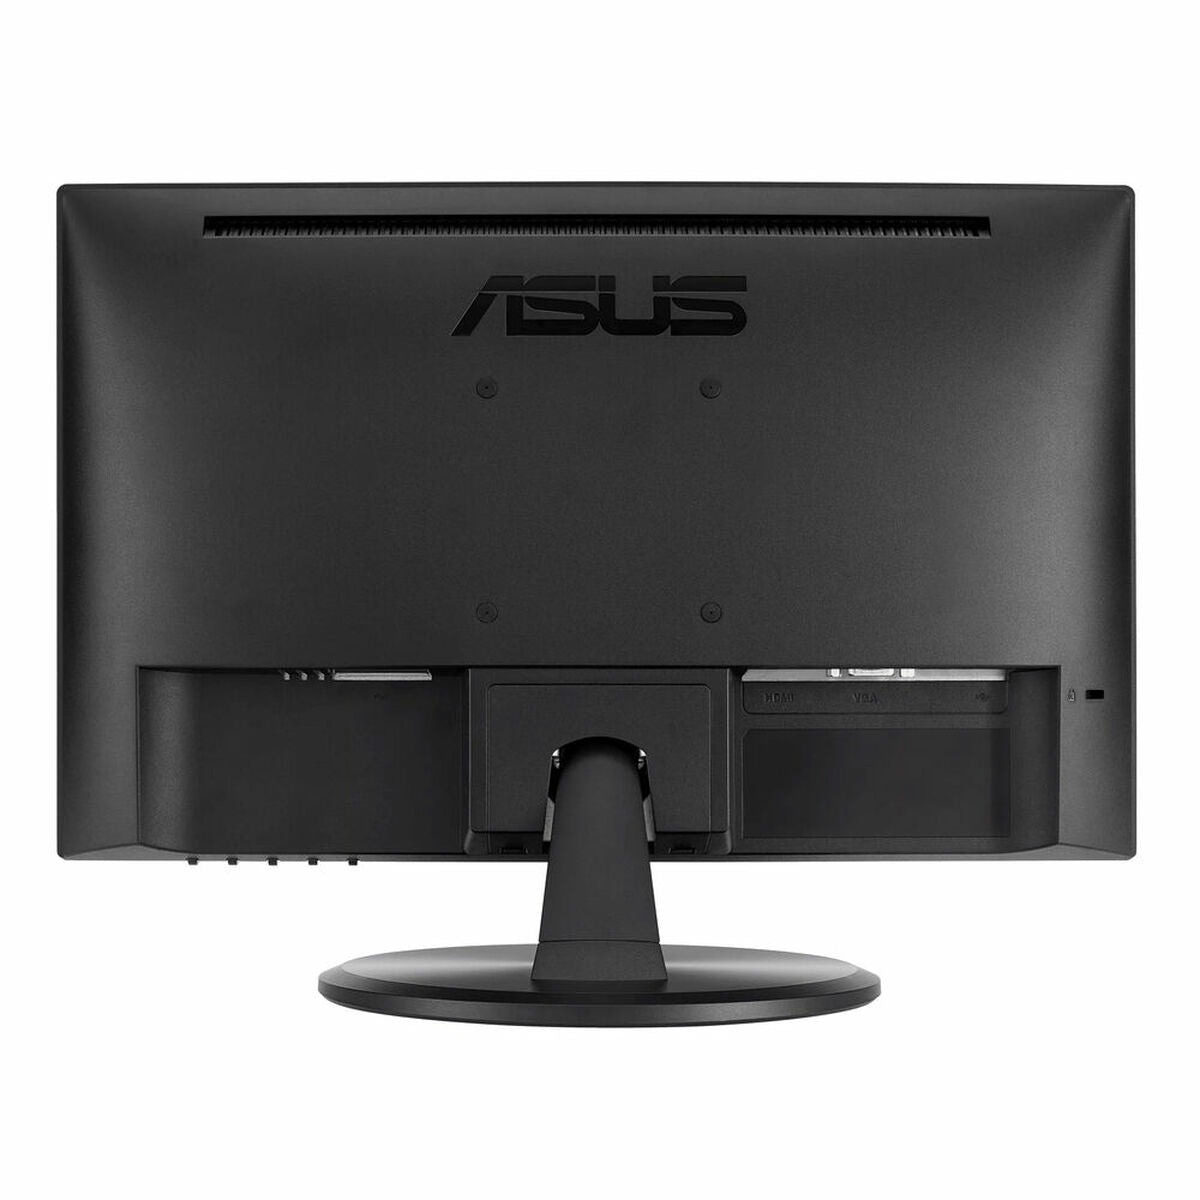 Monitor Asus VT168HR 15.6" FHD LED Full HD 15"